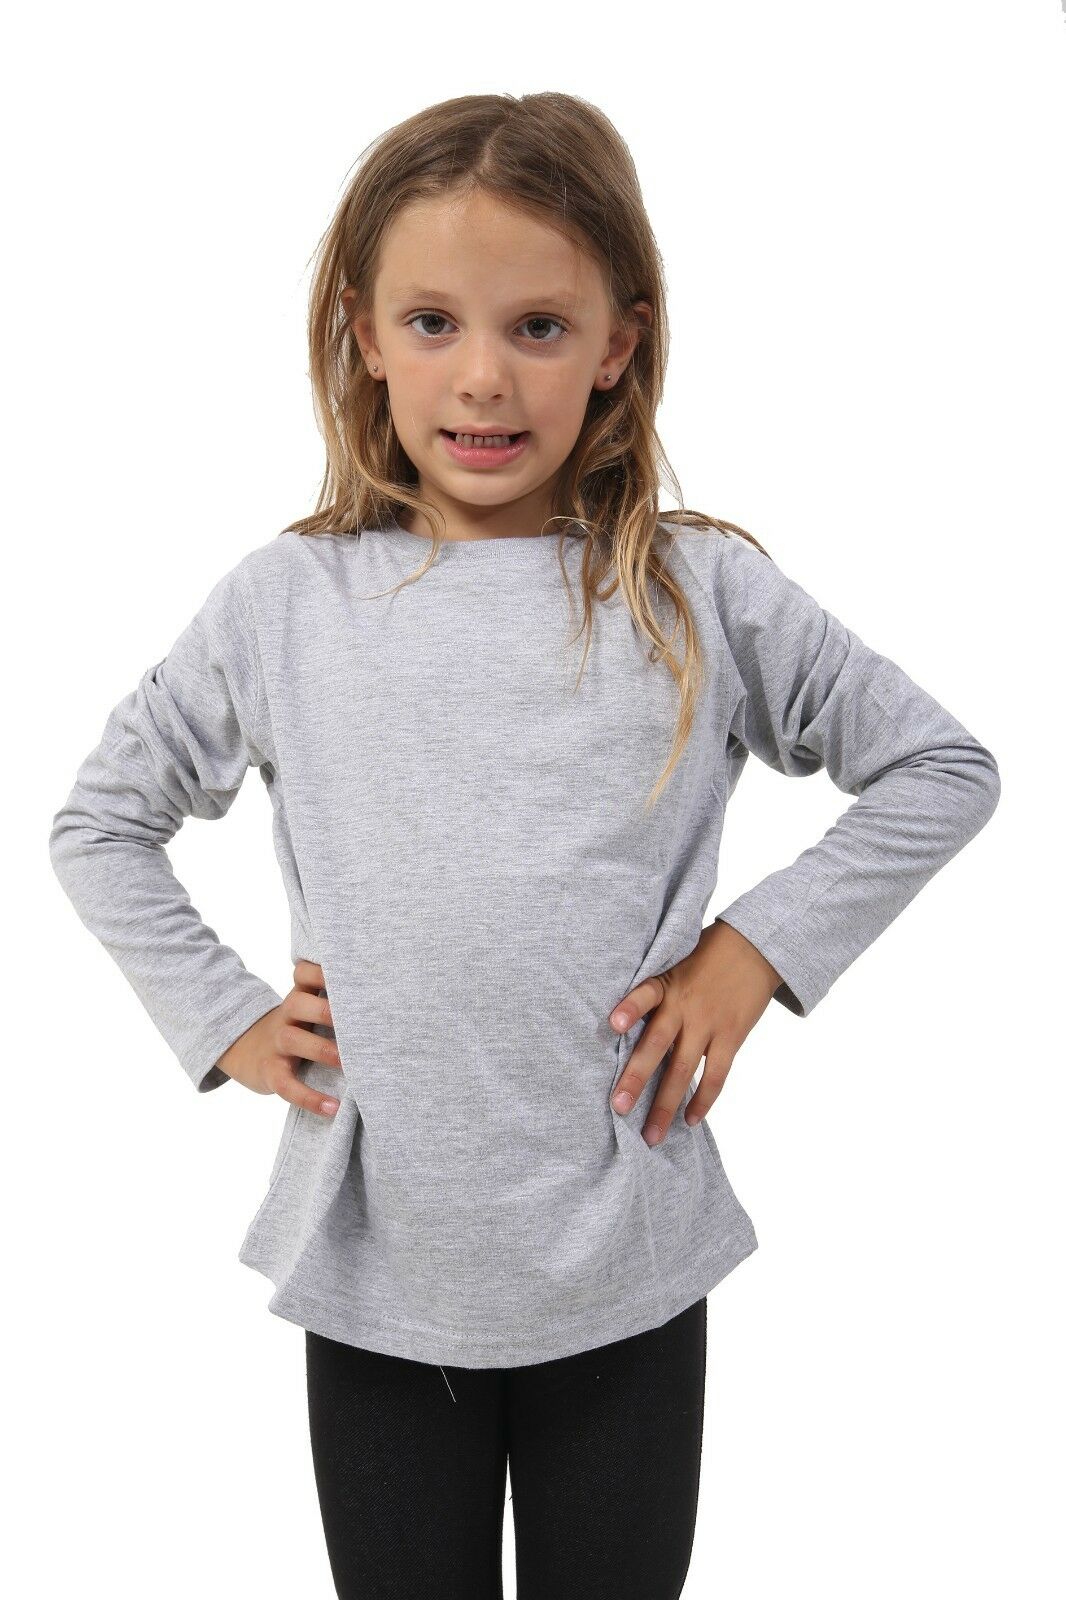 Kids Plain Basic Top Long Sleeve Girls Boys Uniform T-Shirt Tops 2-13 Years 2-3 Years, Lemon